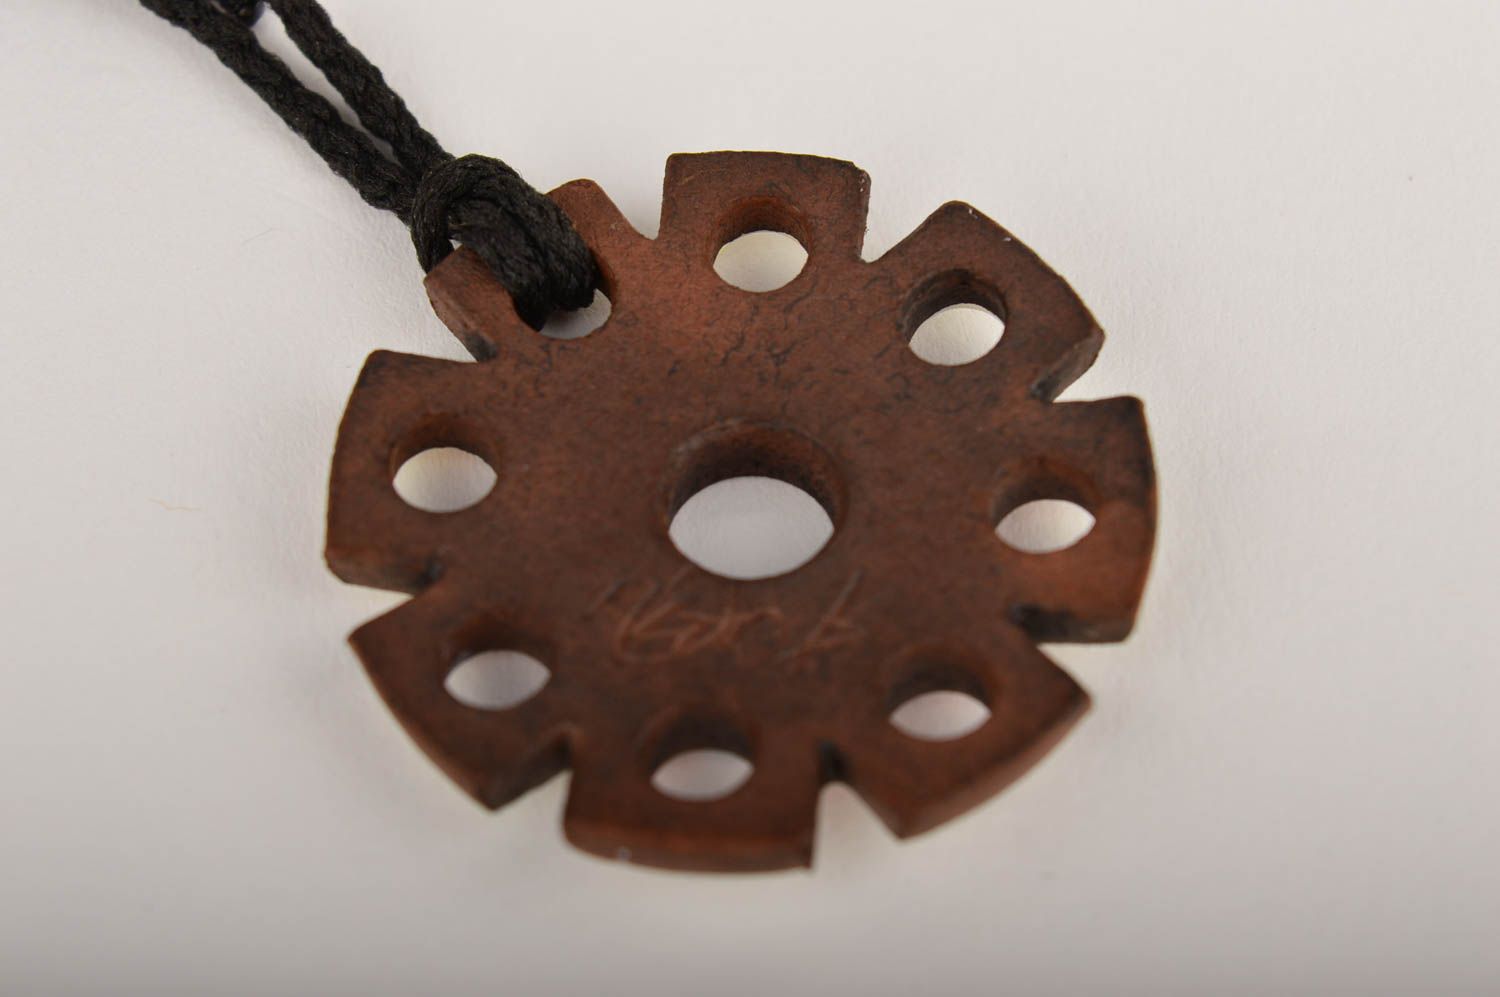 Handmade pendant clay pendant for women gift ideas designer clay jewelry photo 4